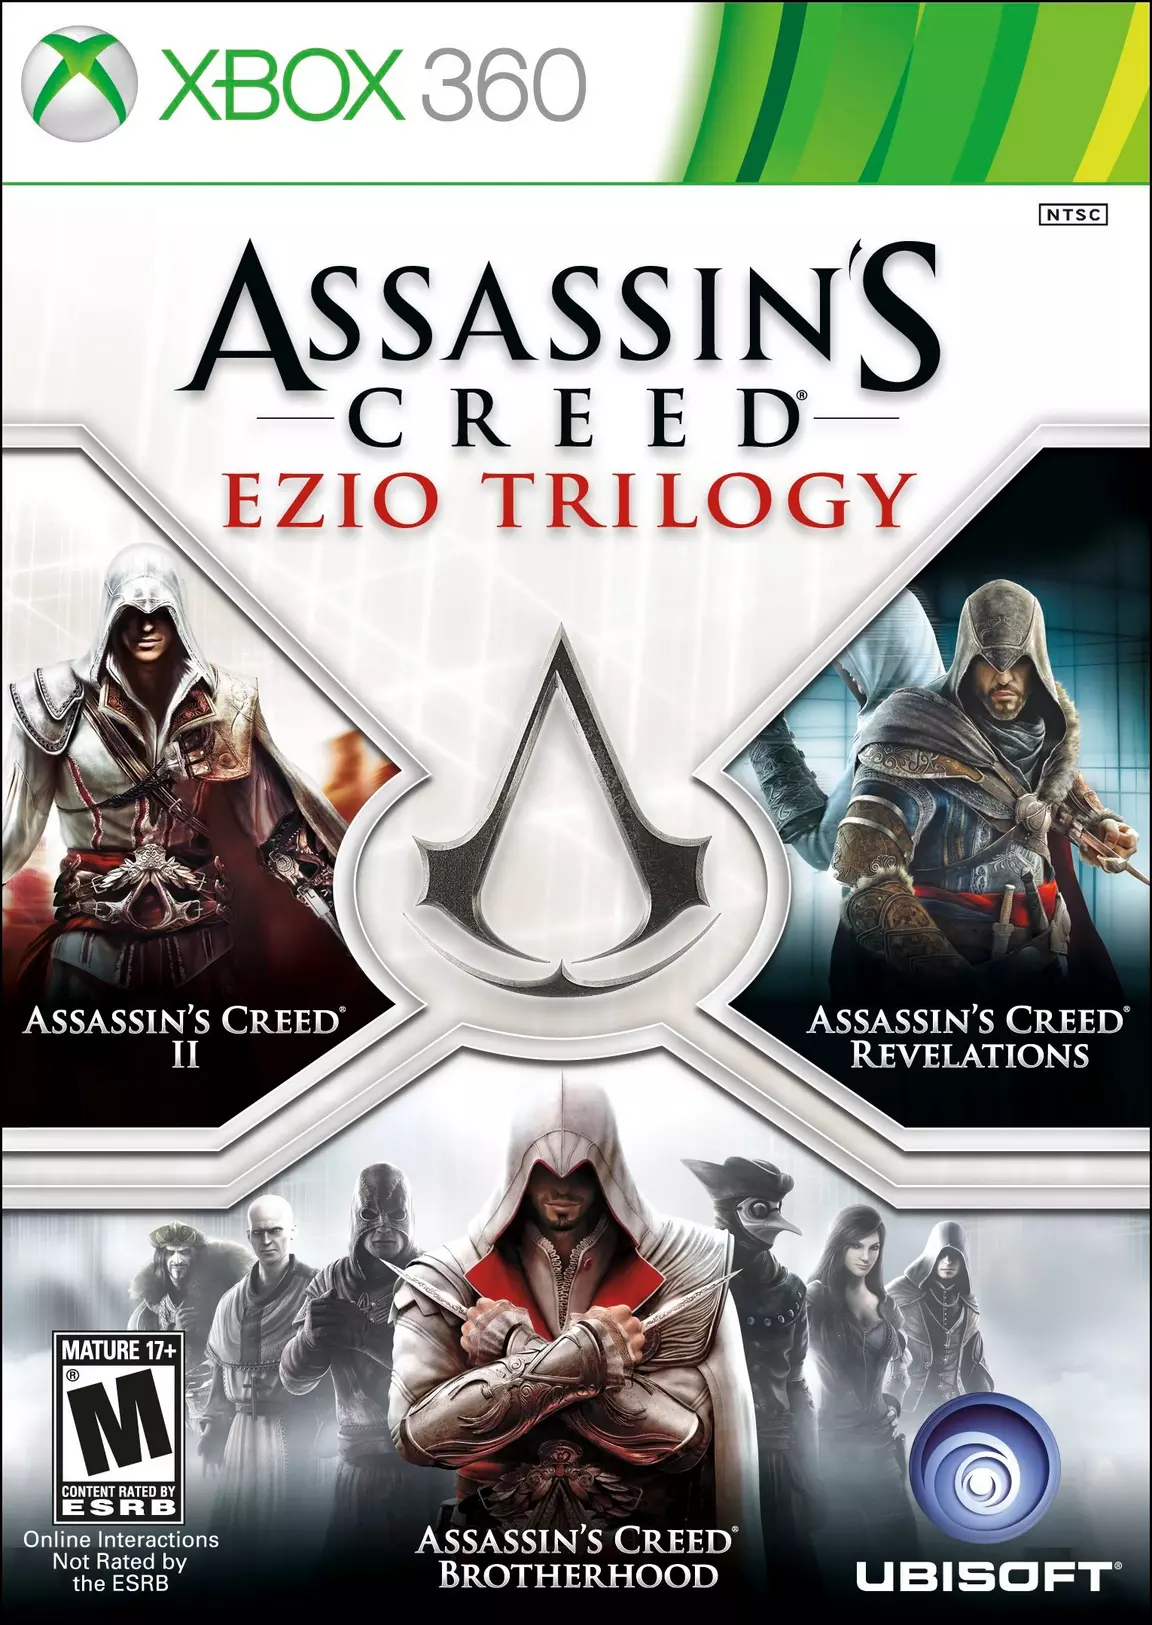 Stof ik heb dorst telescoop Assassin's Creed Games Xbox 360 - TESTED | eBay